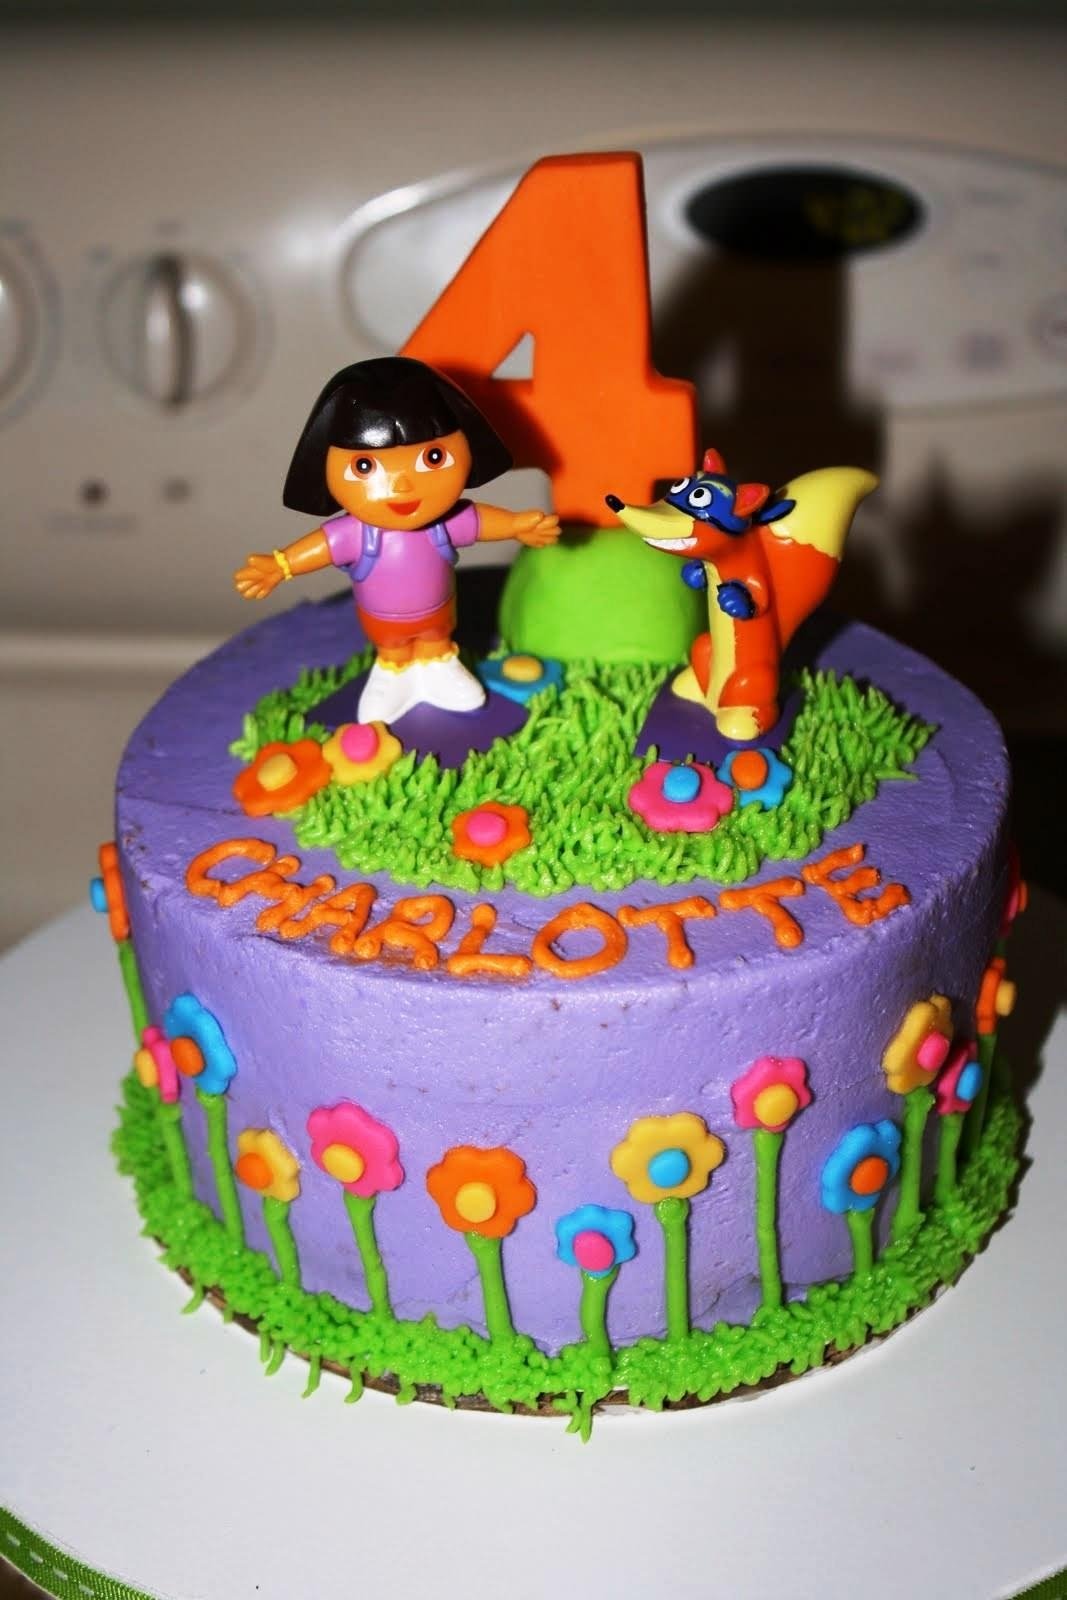 10 Awesome Dora The Explorer Cake Ideas dora birthday cake images dorcas jambo pinterest dora birthday 2022